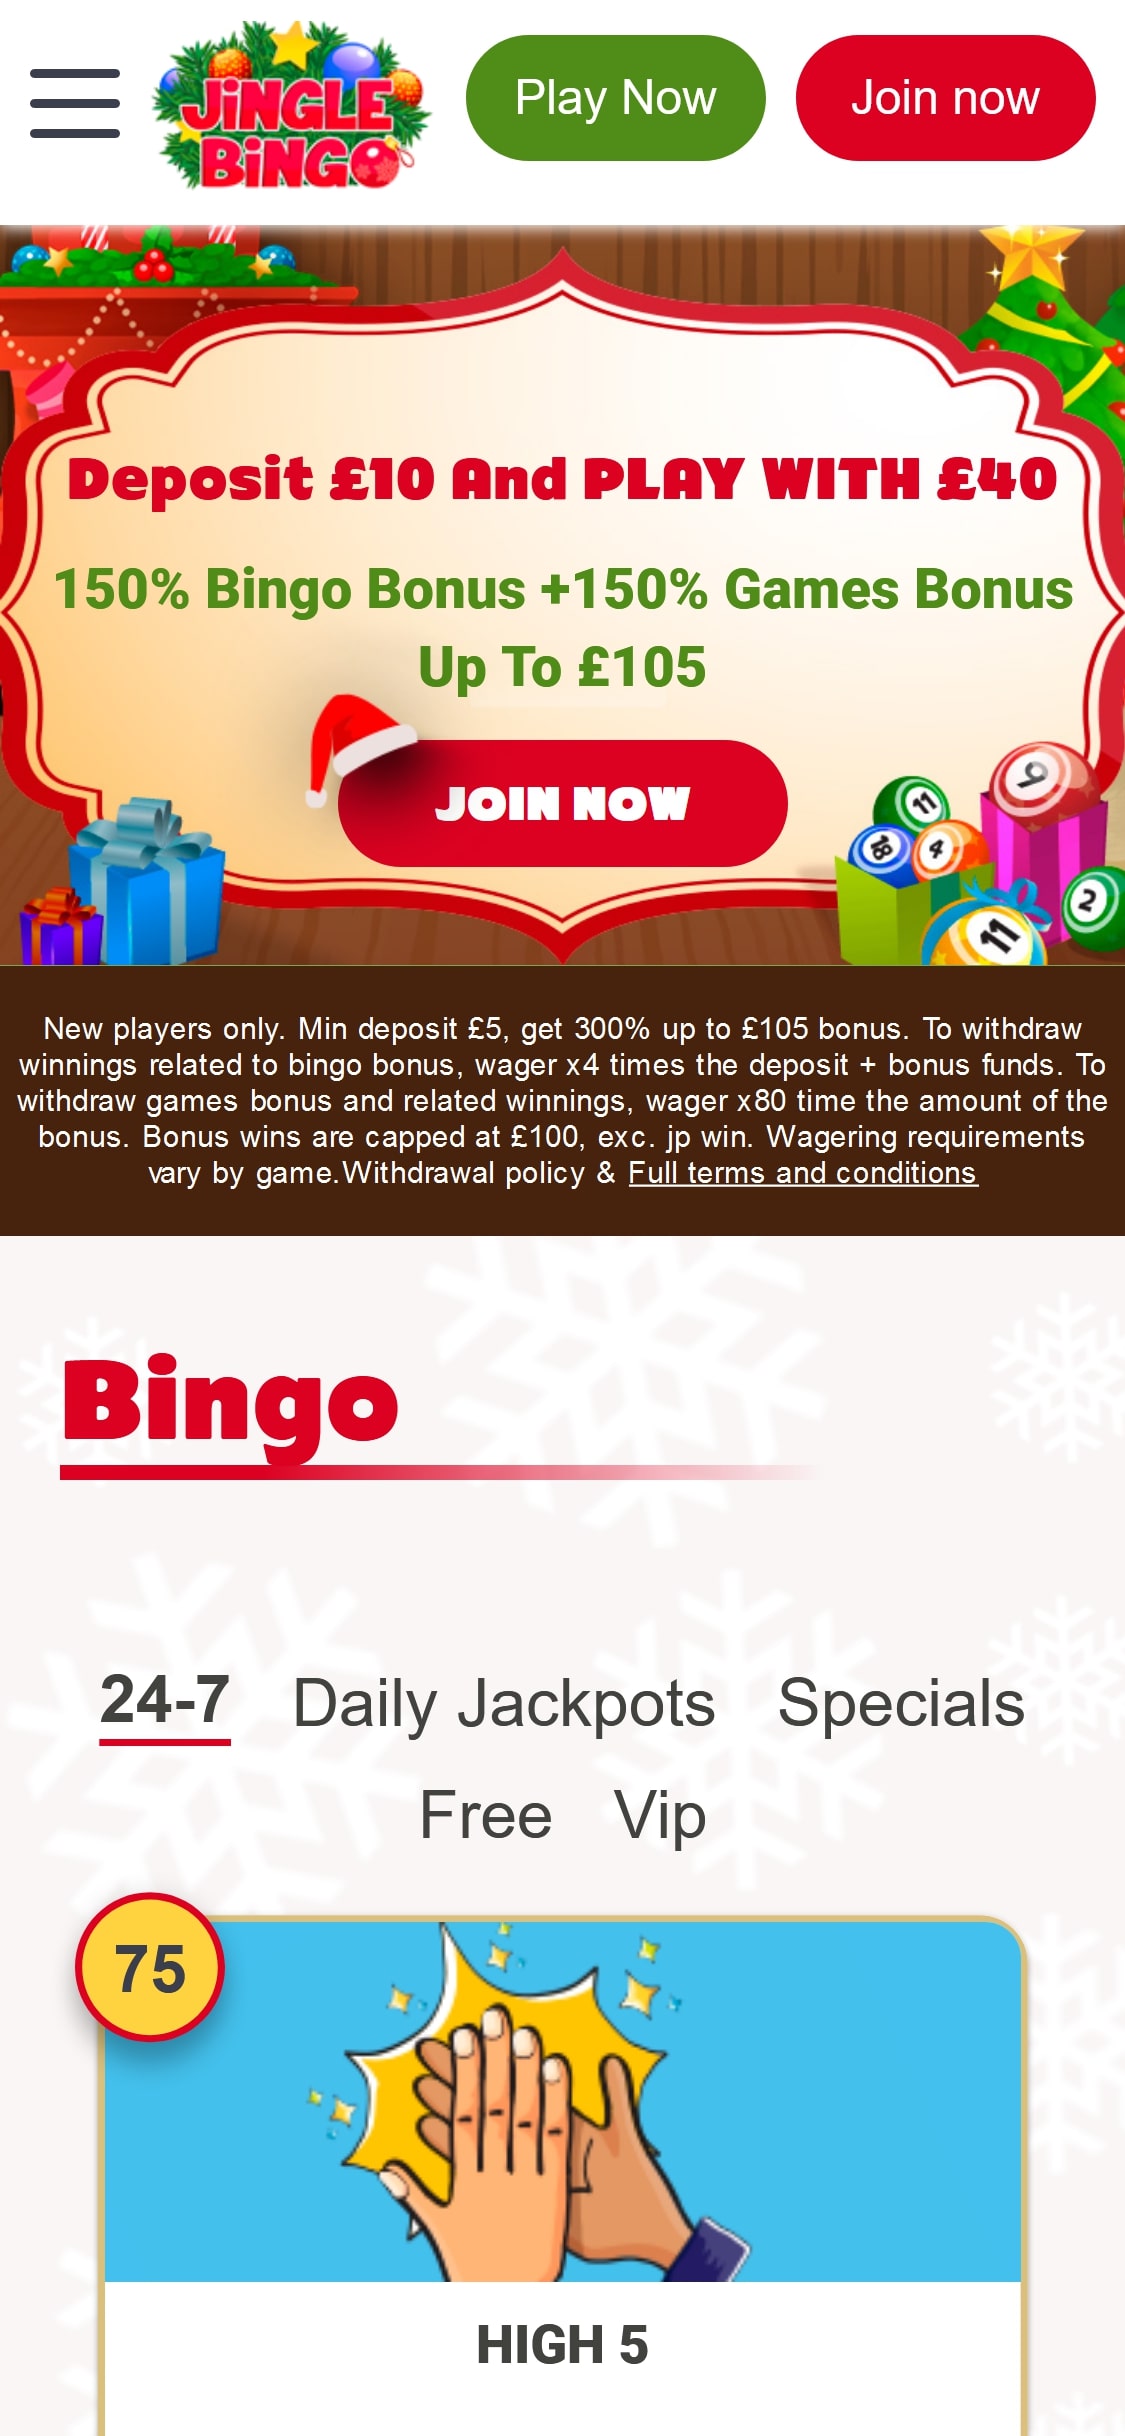 Jingle Bingo Casino Mobile Review